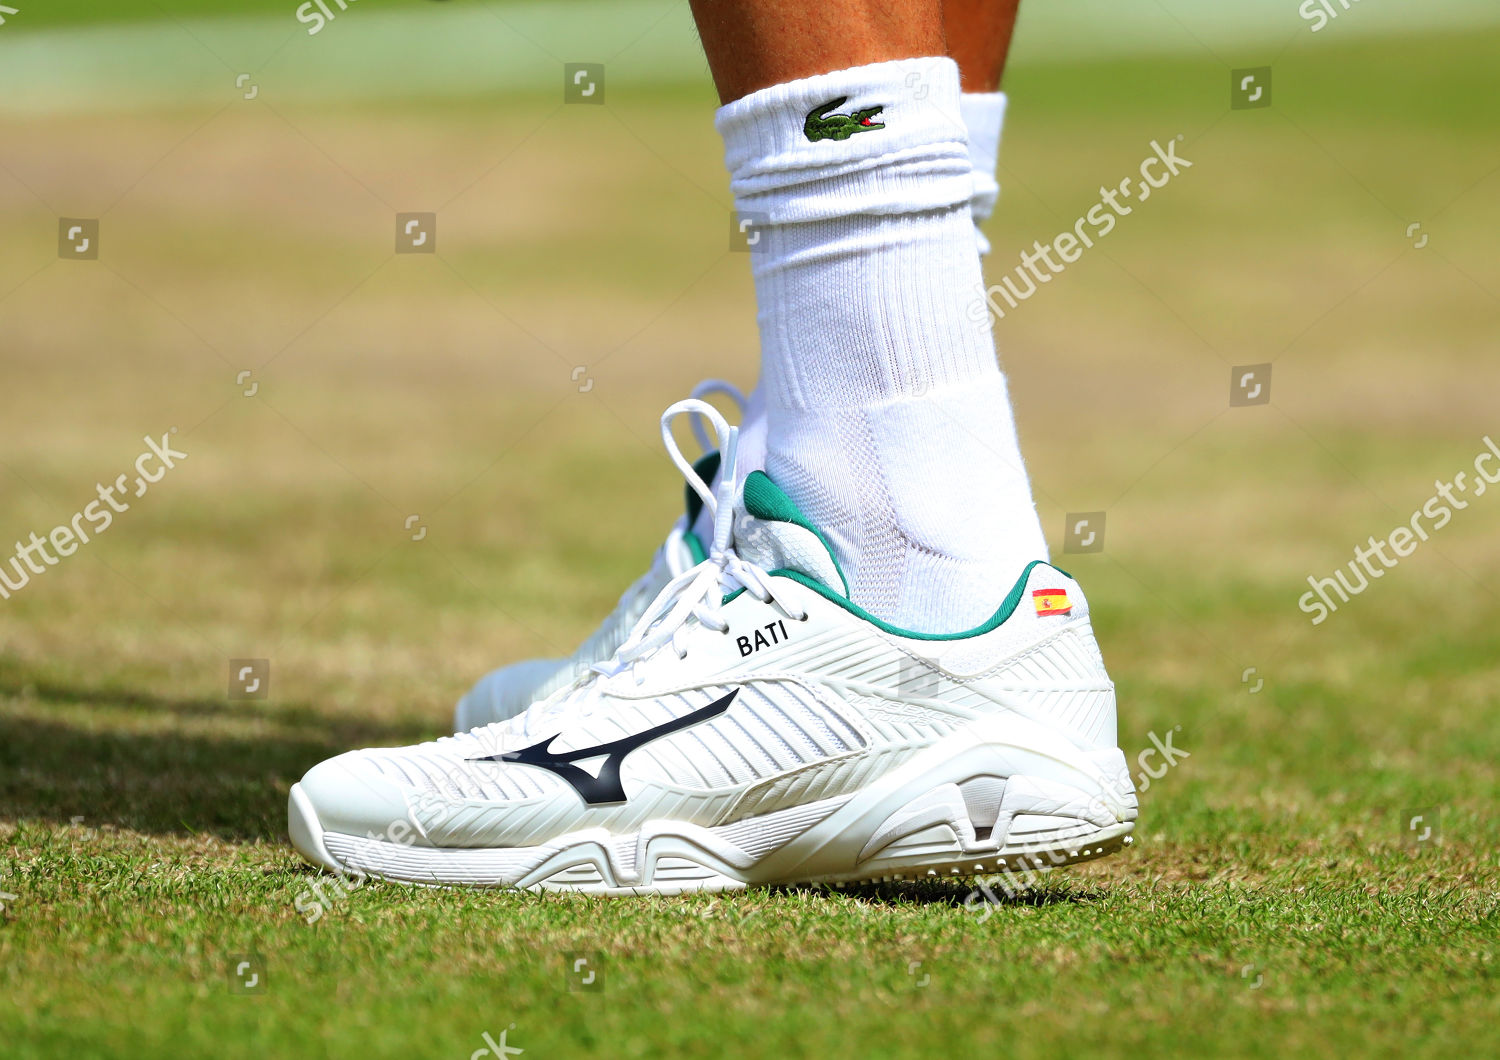 Personalised tennis Shoes Roberto 